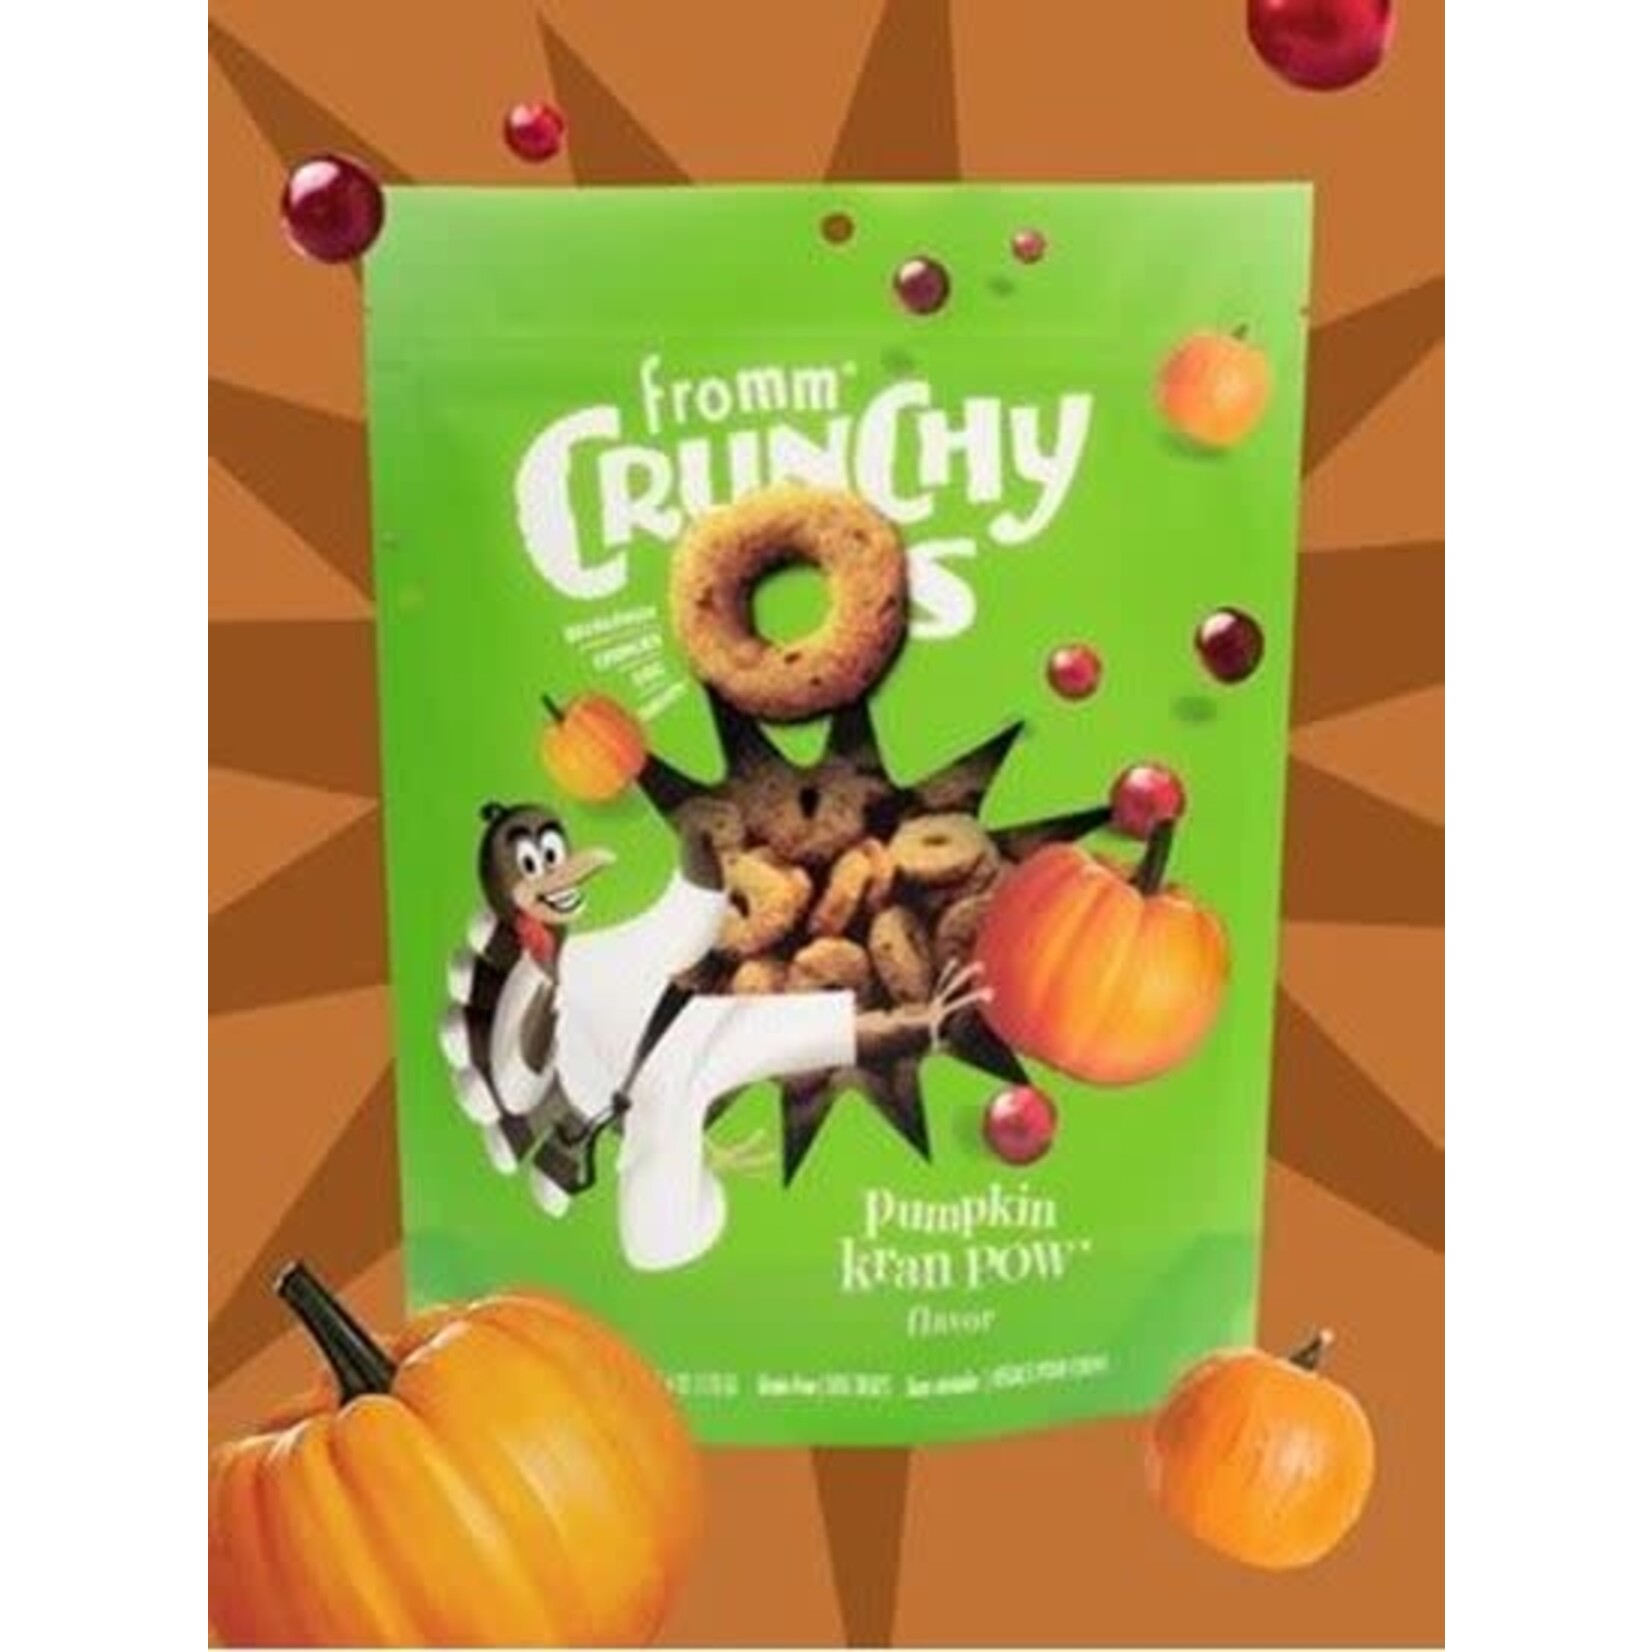 Fromm Crunchy O's Pumpkin Kran Pow Flavor Dog Treats